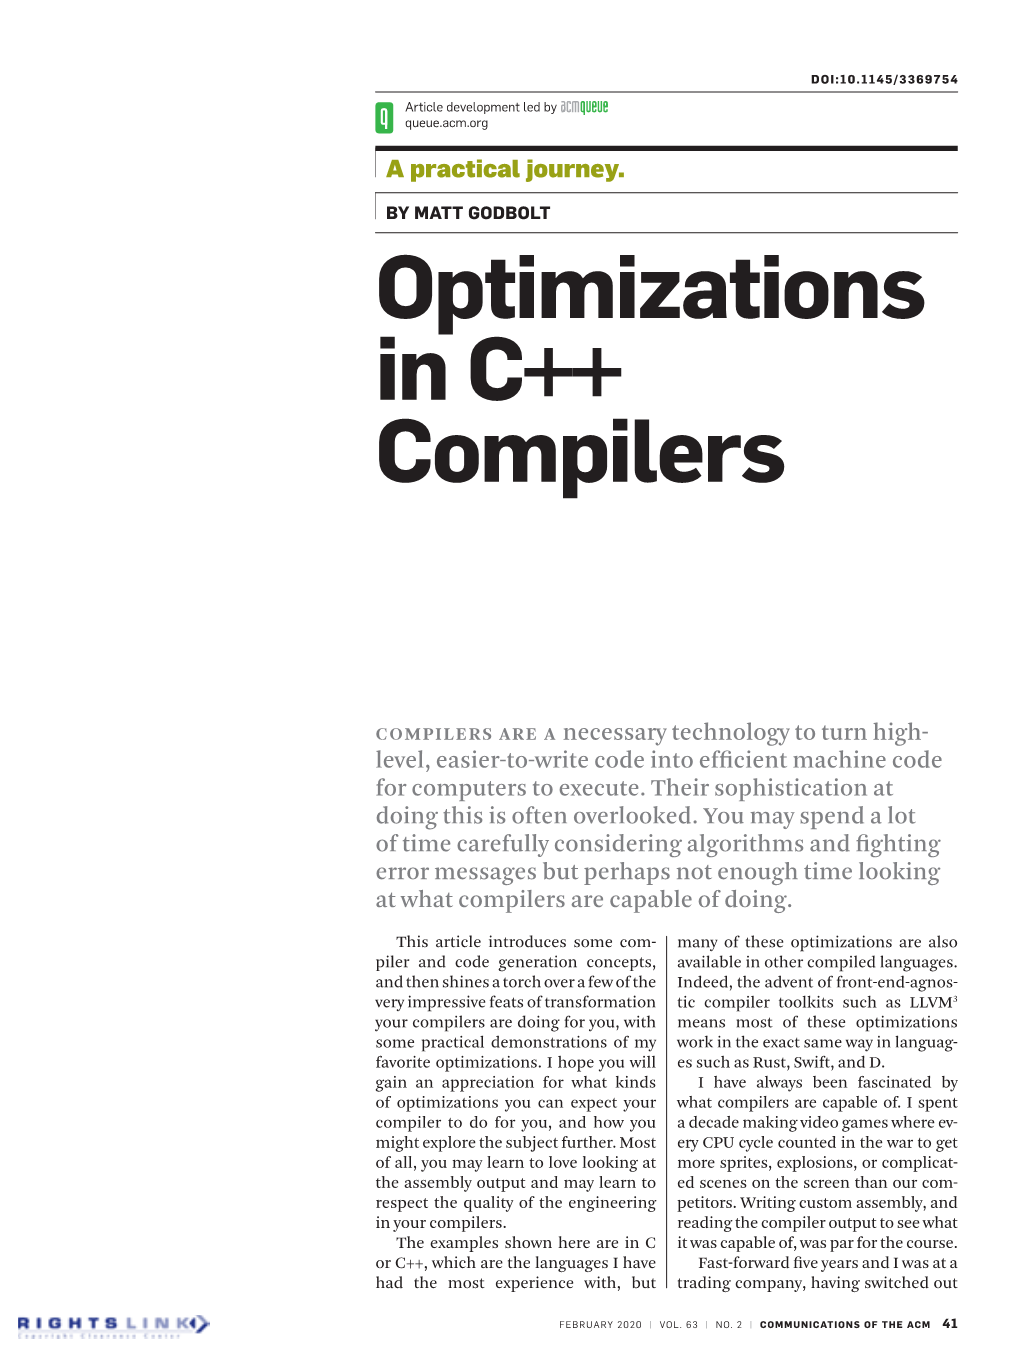 Optimizations in C++ Compilers